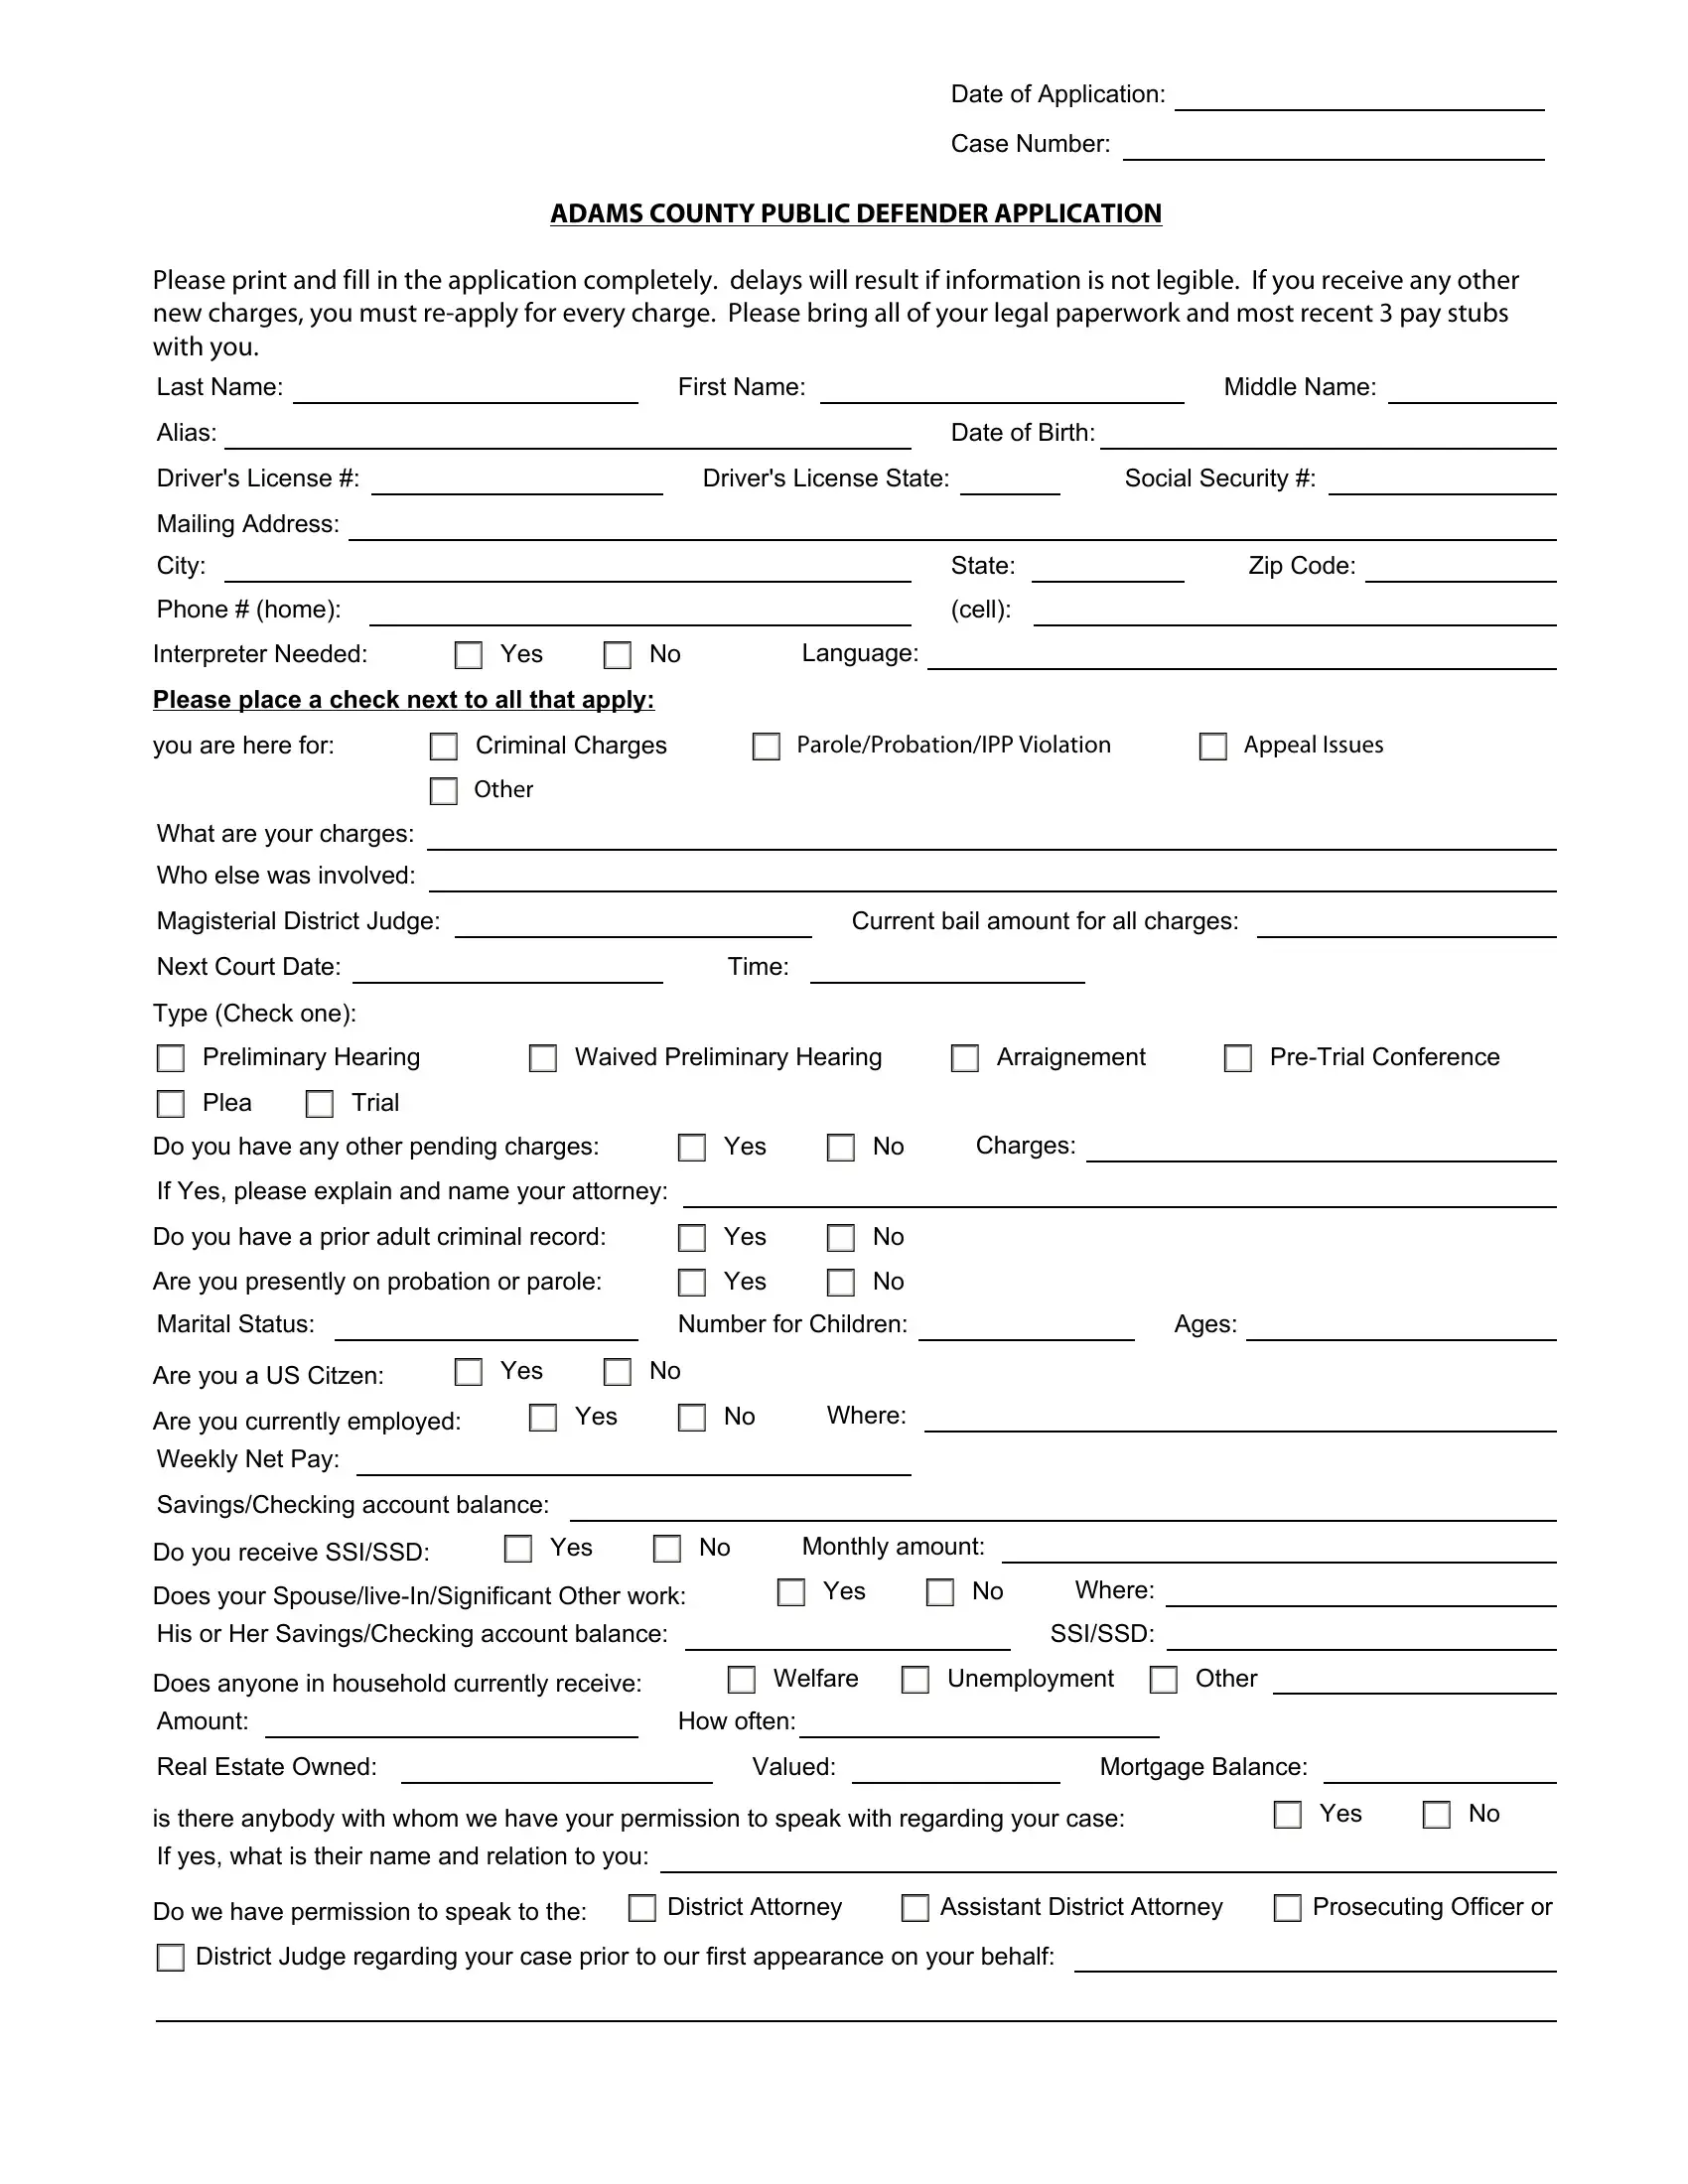 Adams Public Defender Application Form Preview